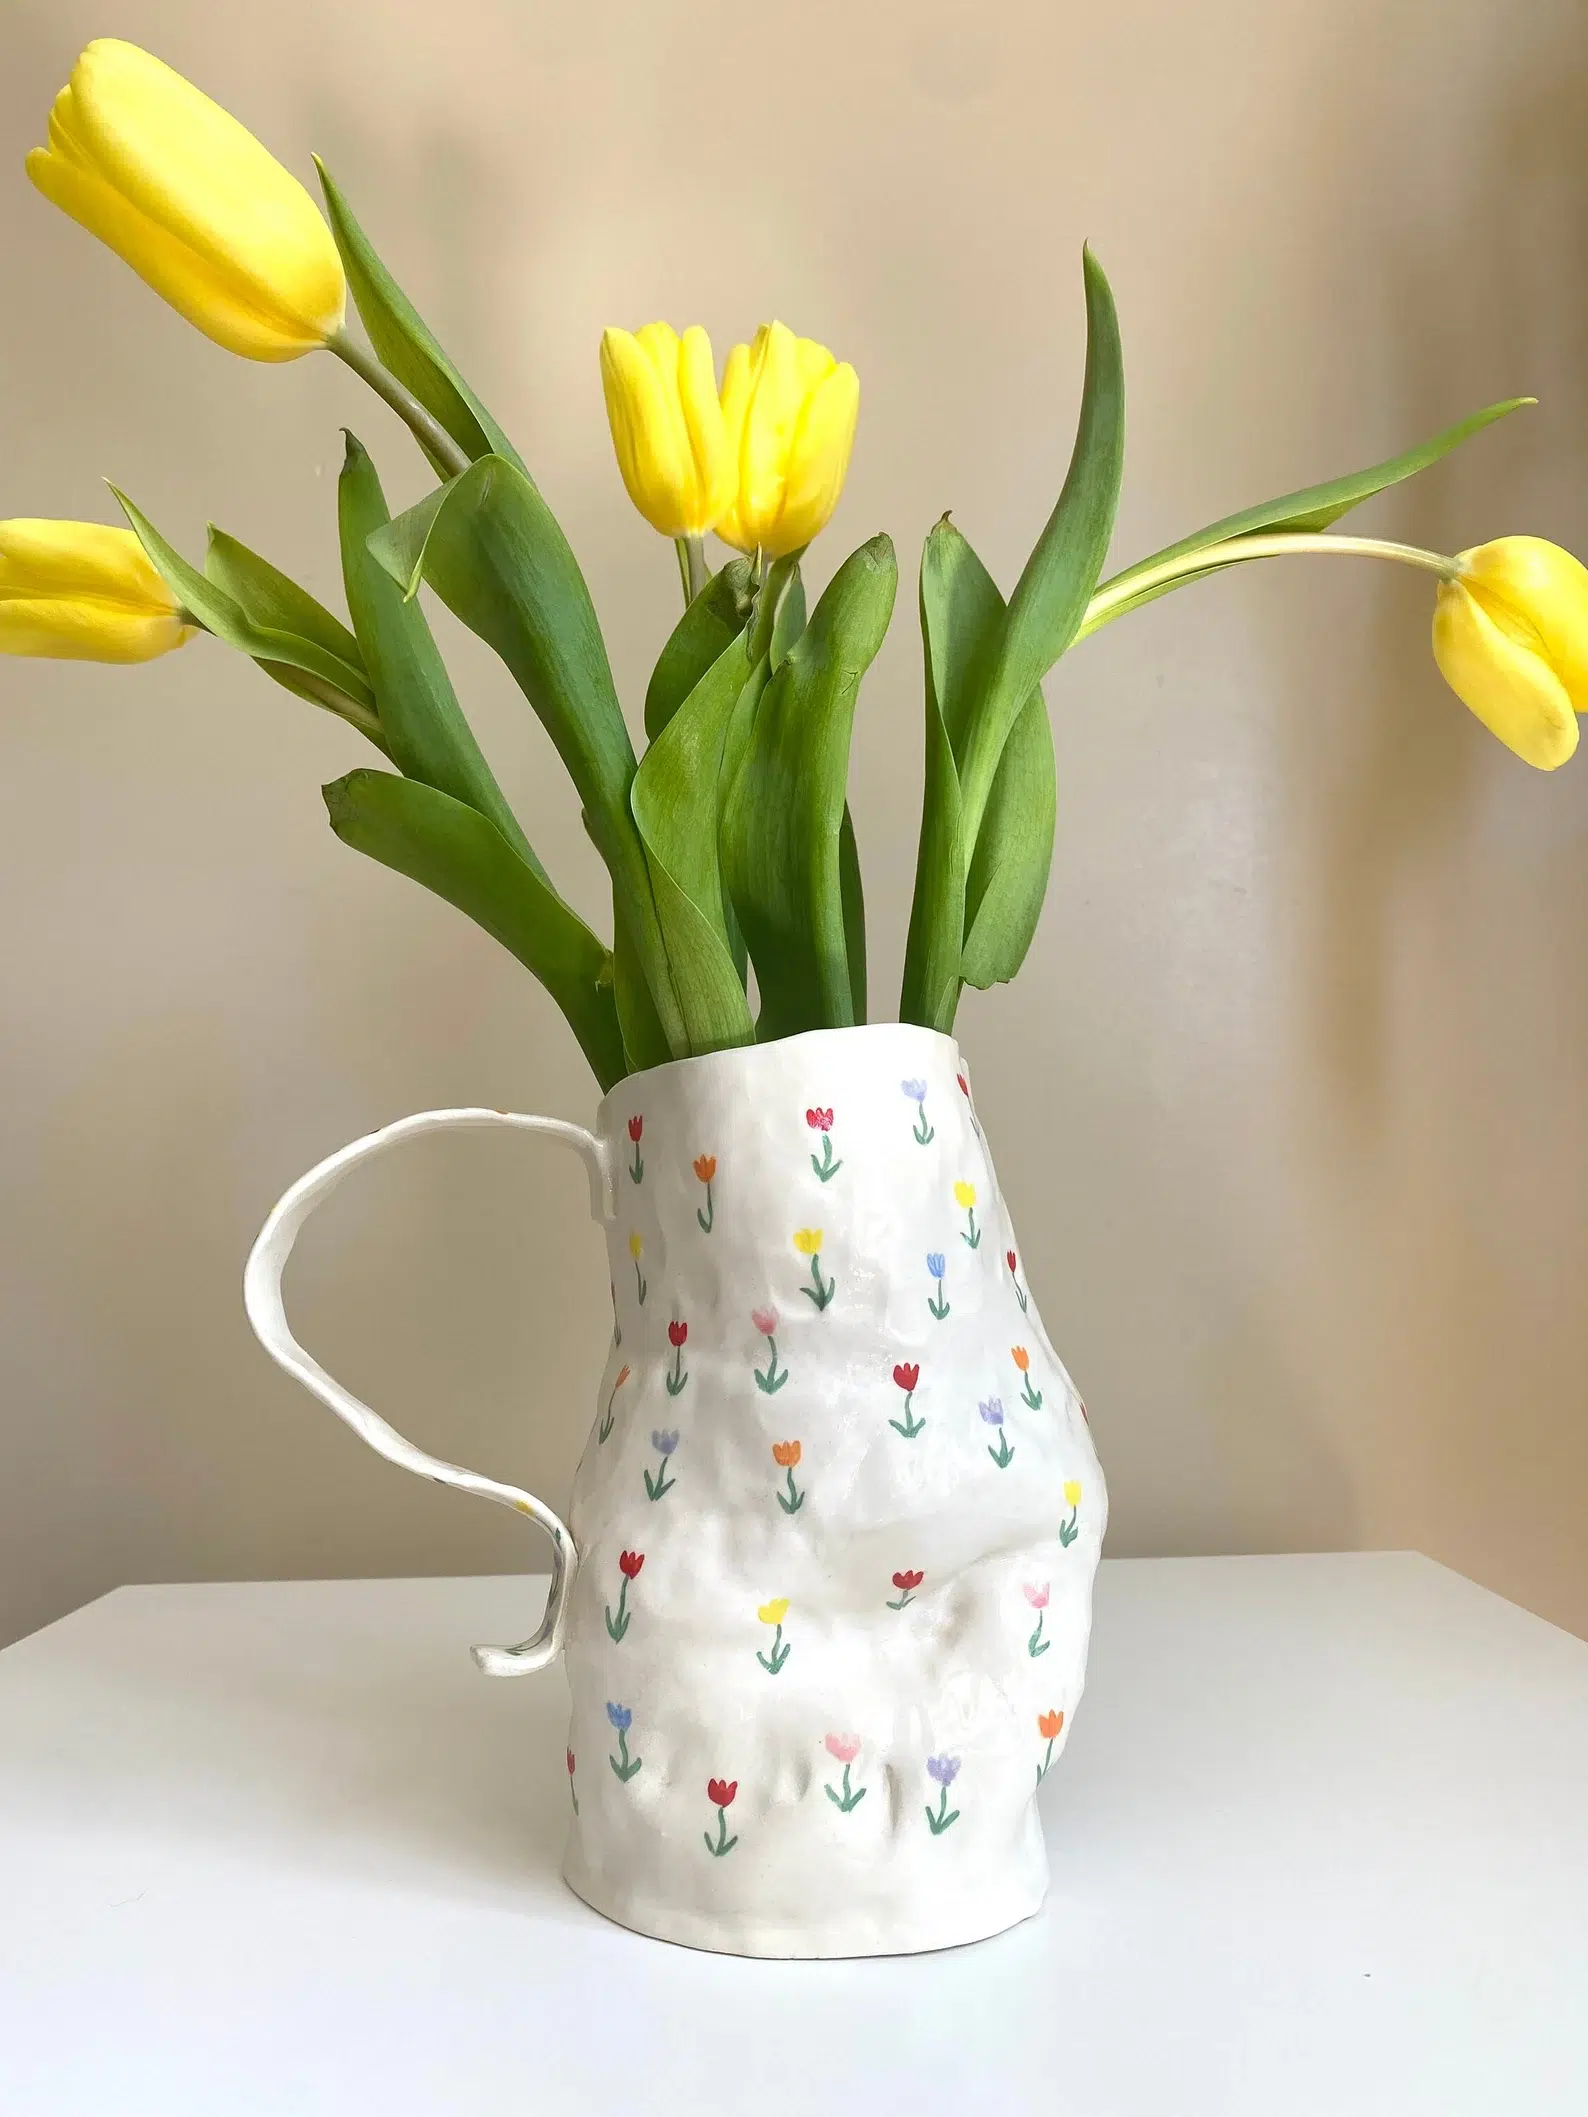 A handmade painted ceramic vase from La Fleur Artisane